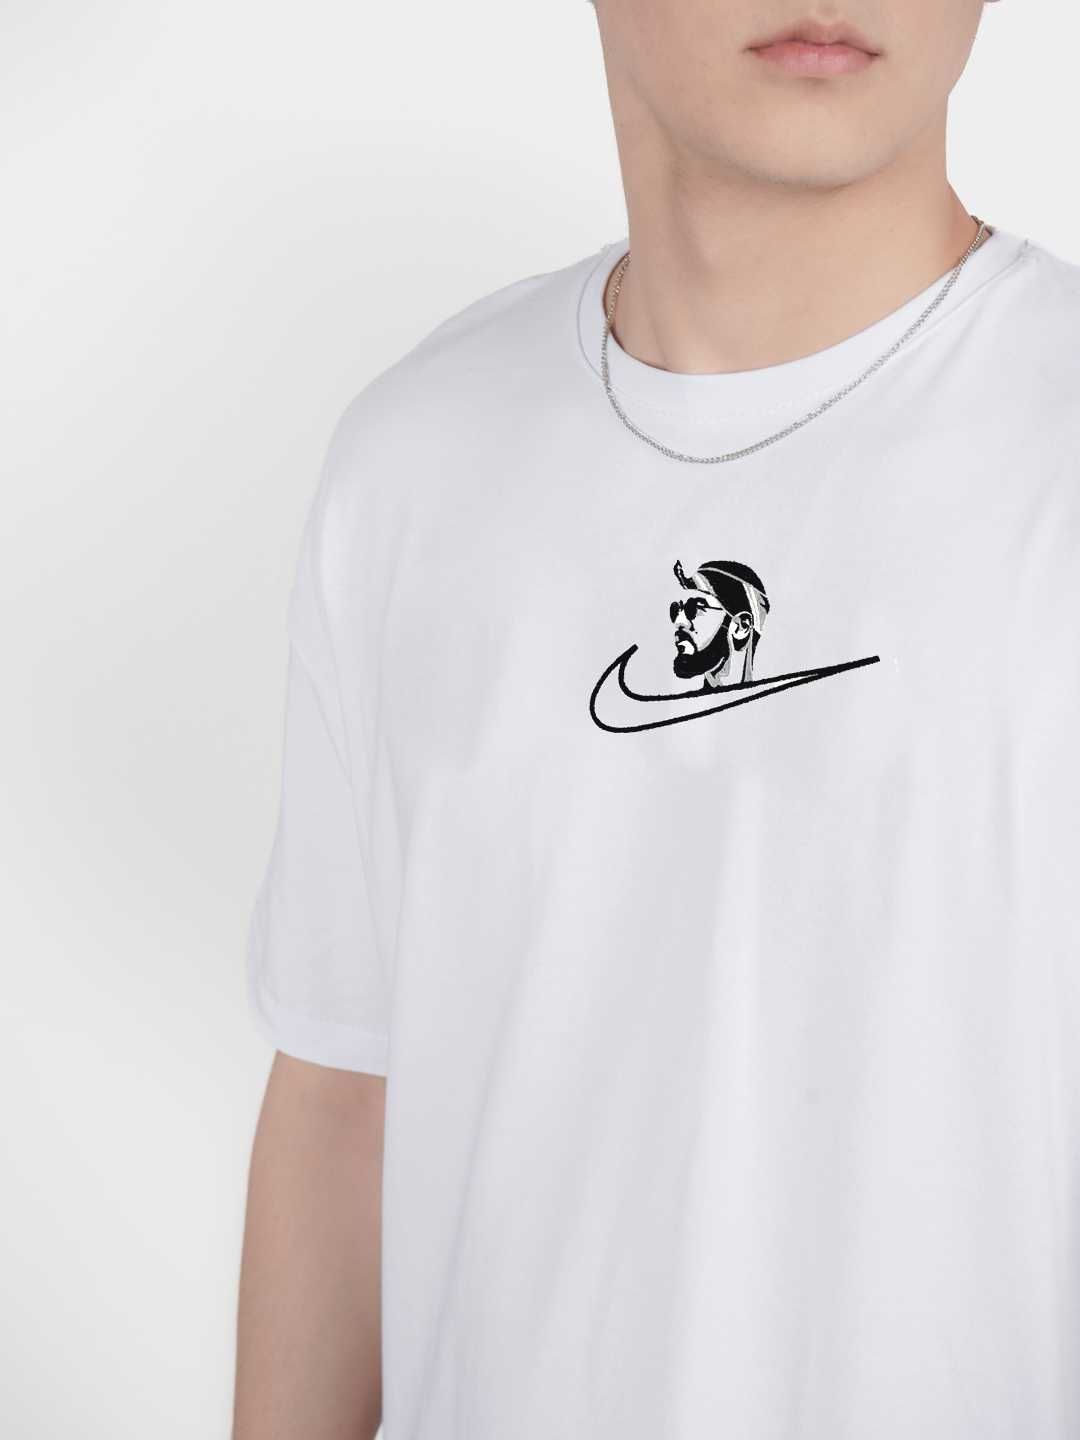 Мужская футболка, Футболка унисекс с принтом Nike MiyaGi Hajime летняя